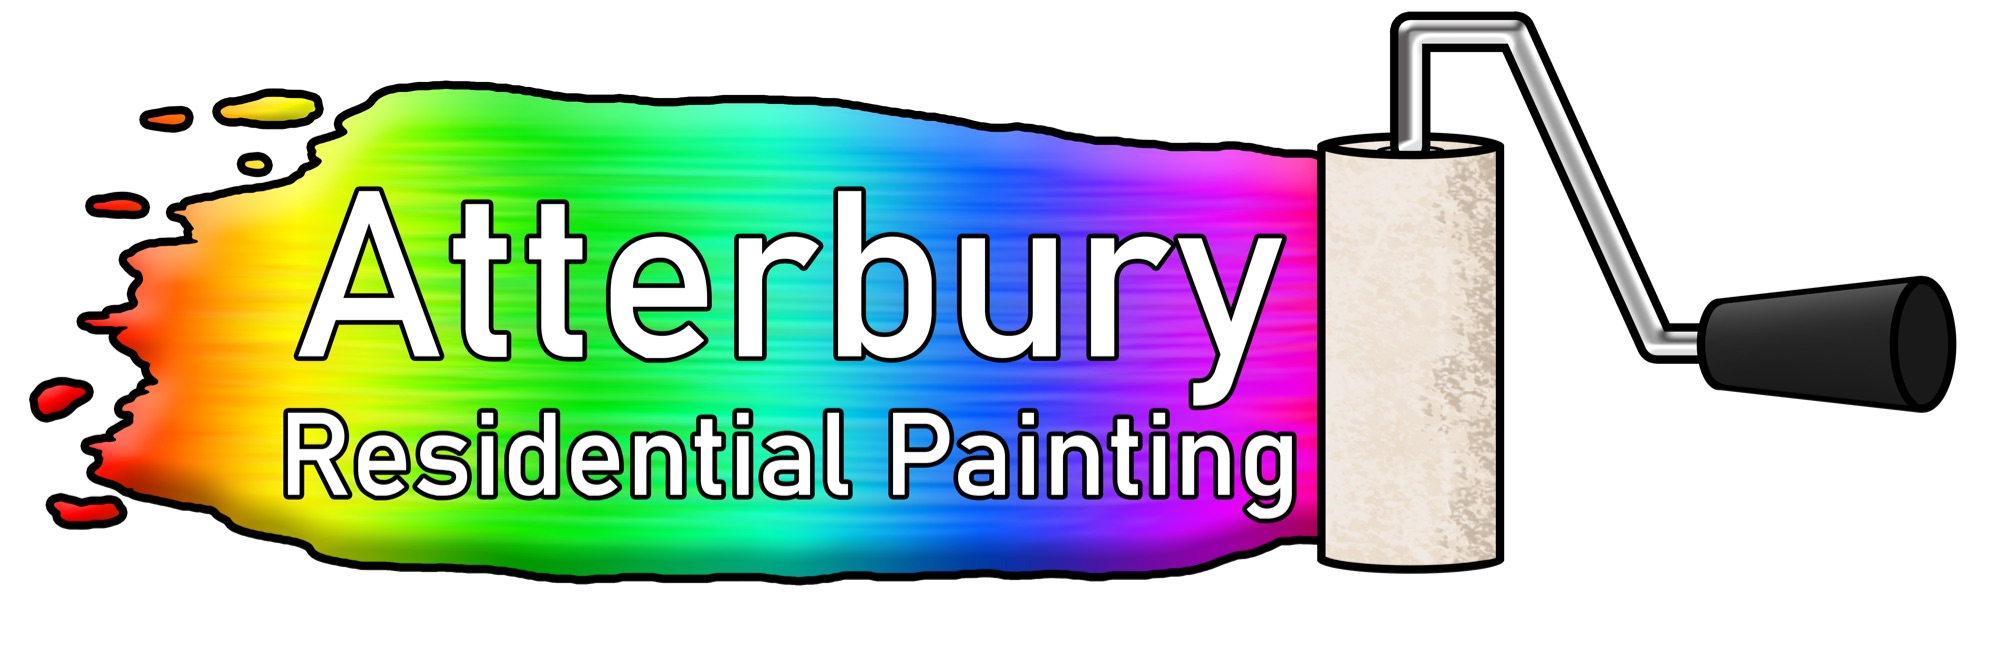 Atterbury Residential Painting Logo